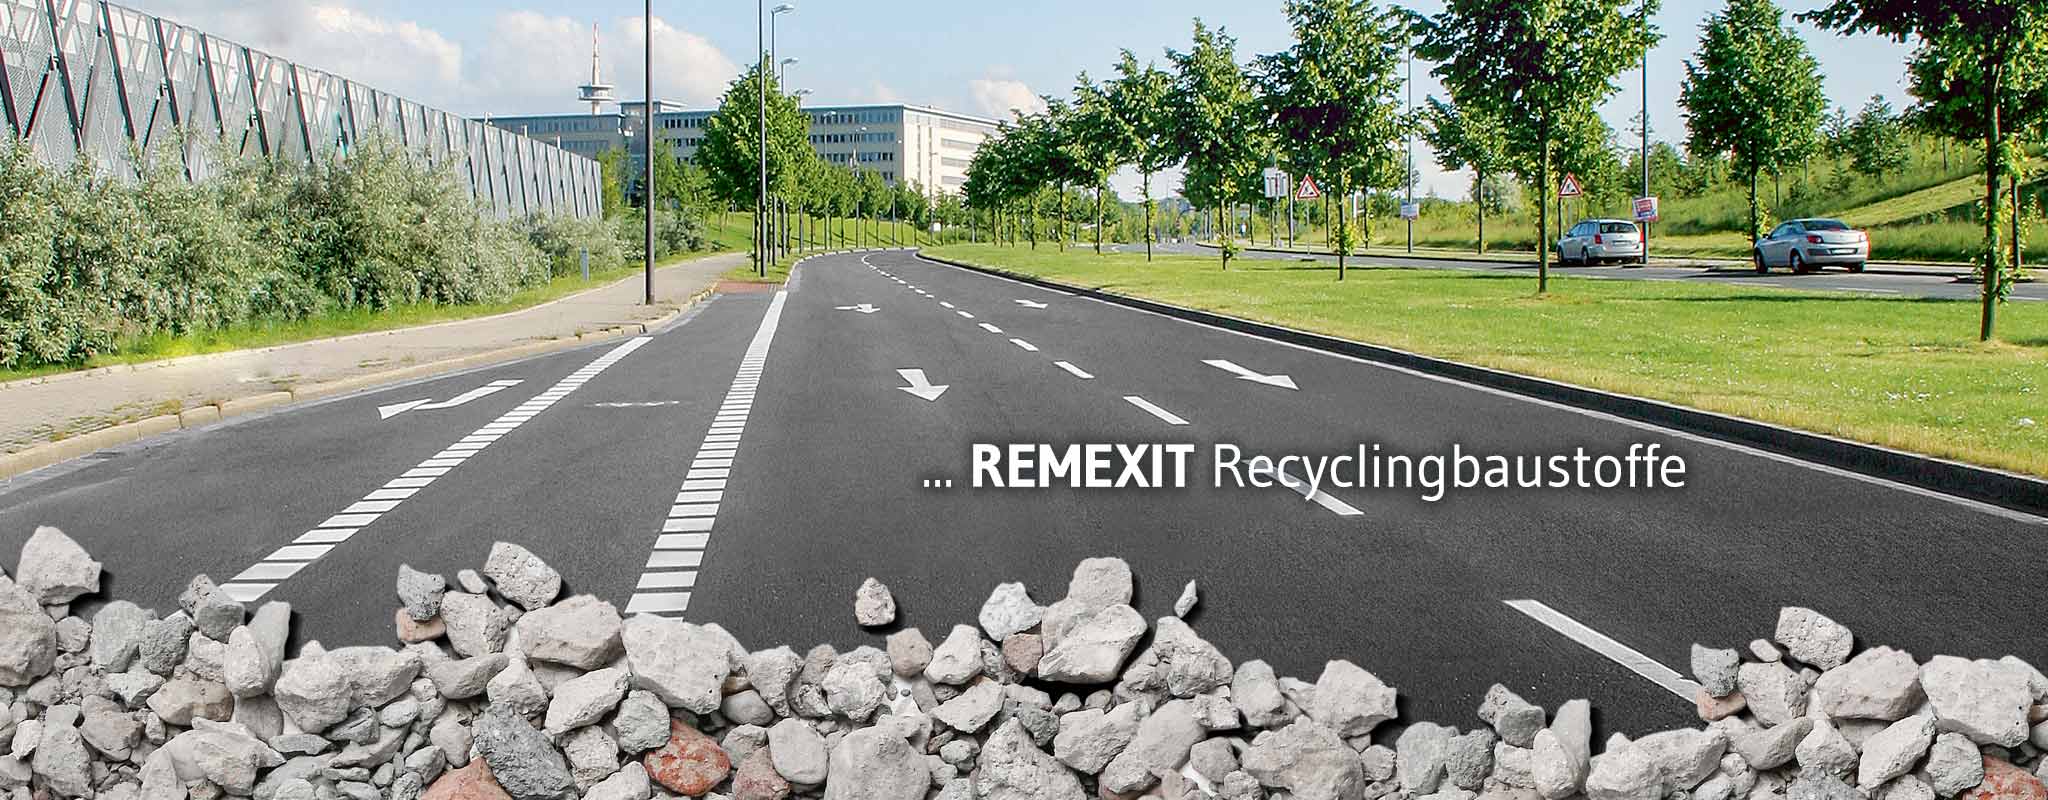 Hochwertiges Baustoffrecyclingergebnis: Recyclingbaustoffe der Marke ergibt remexit®